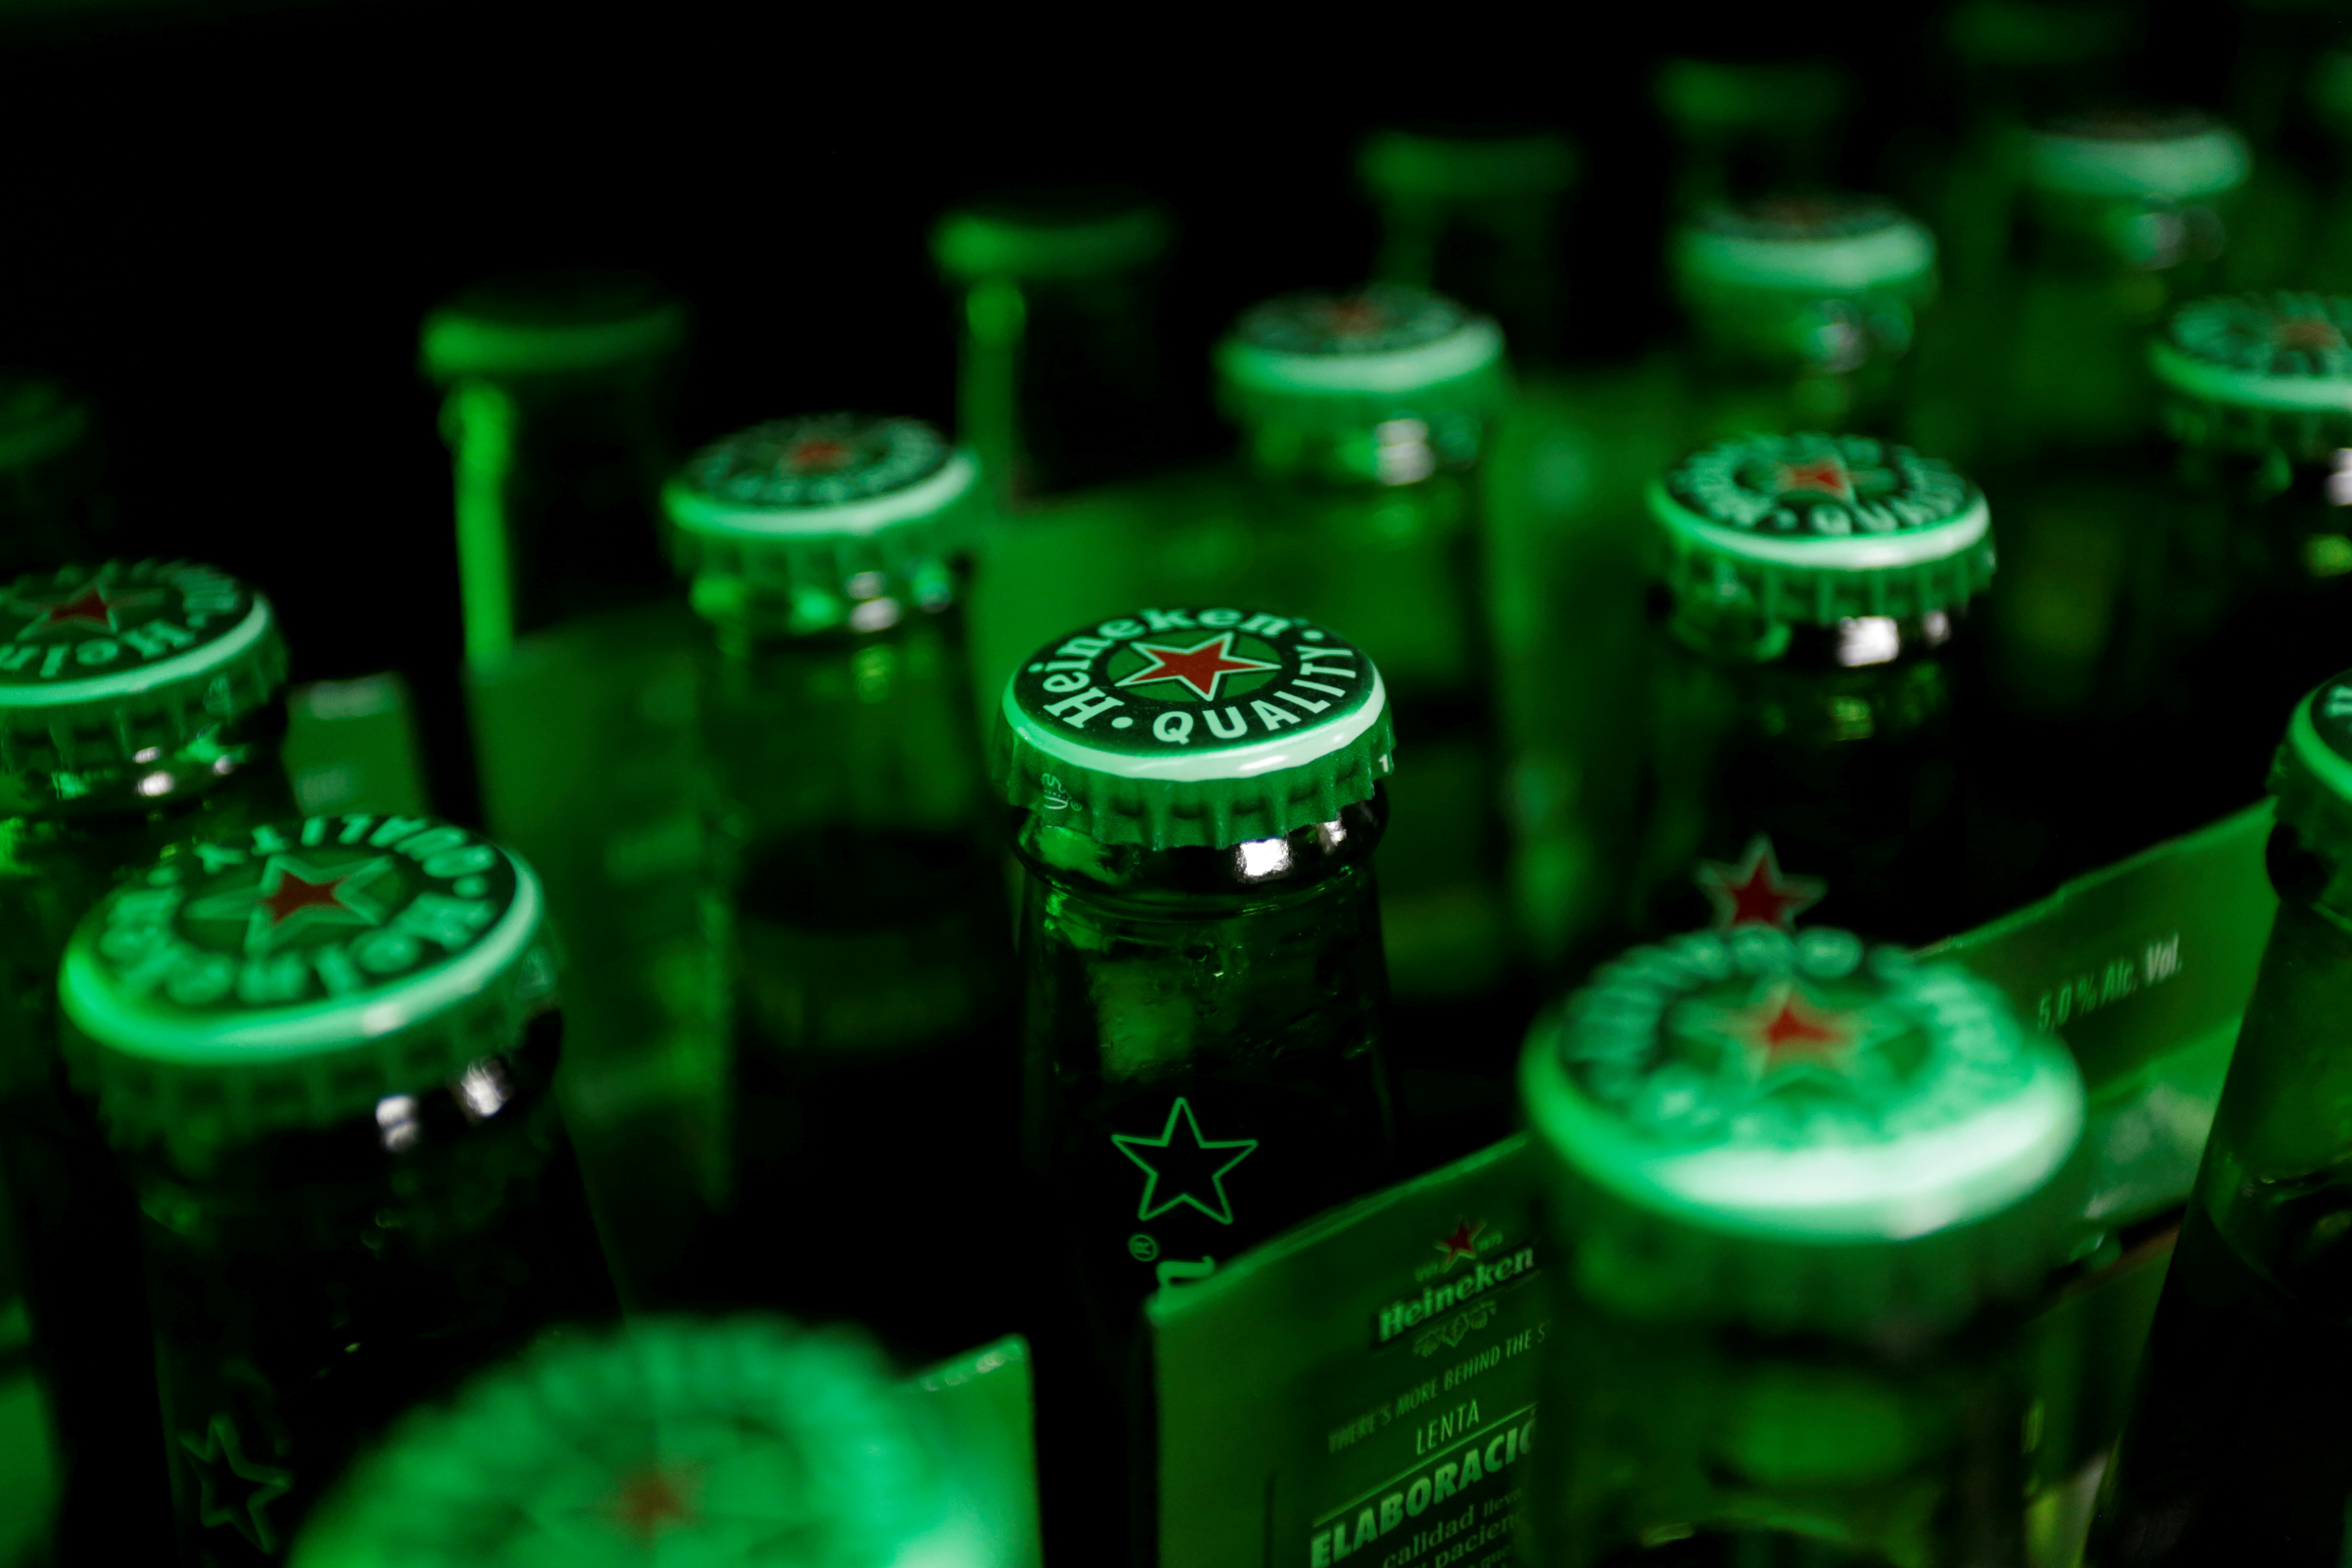 Heineken beer bottles are seen at a bar in Monterrey